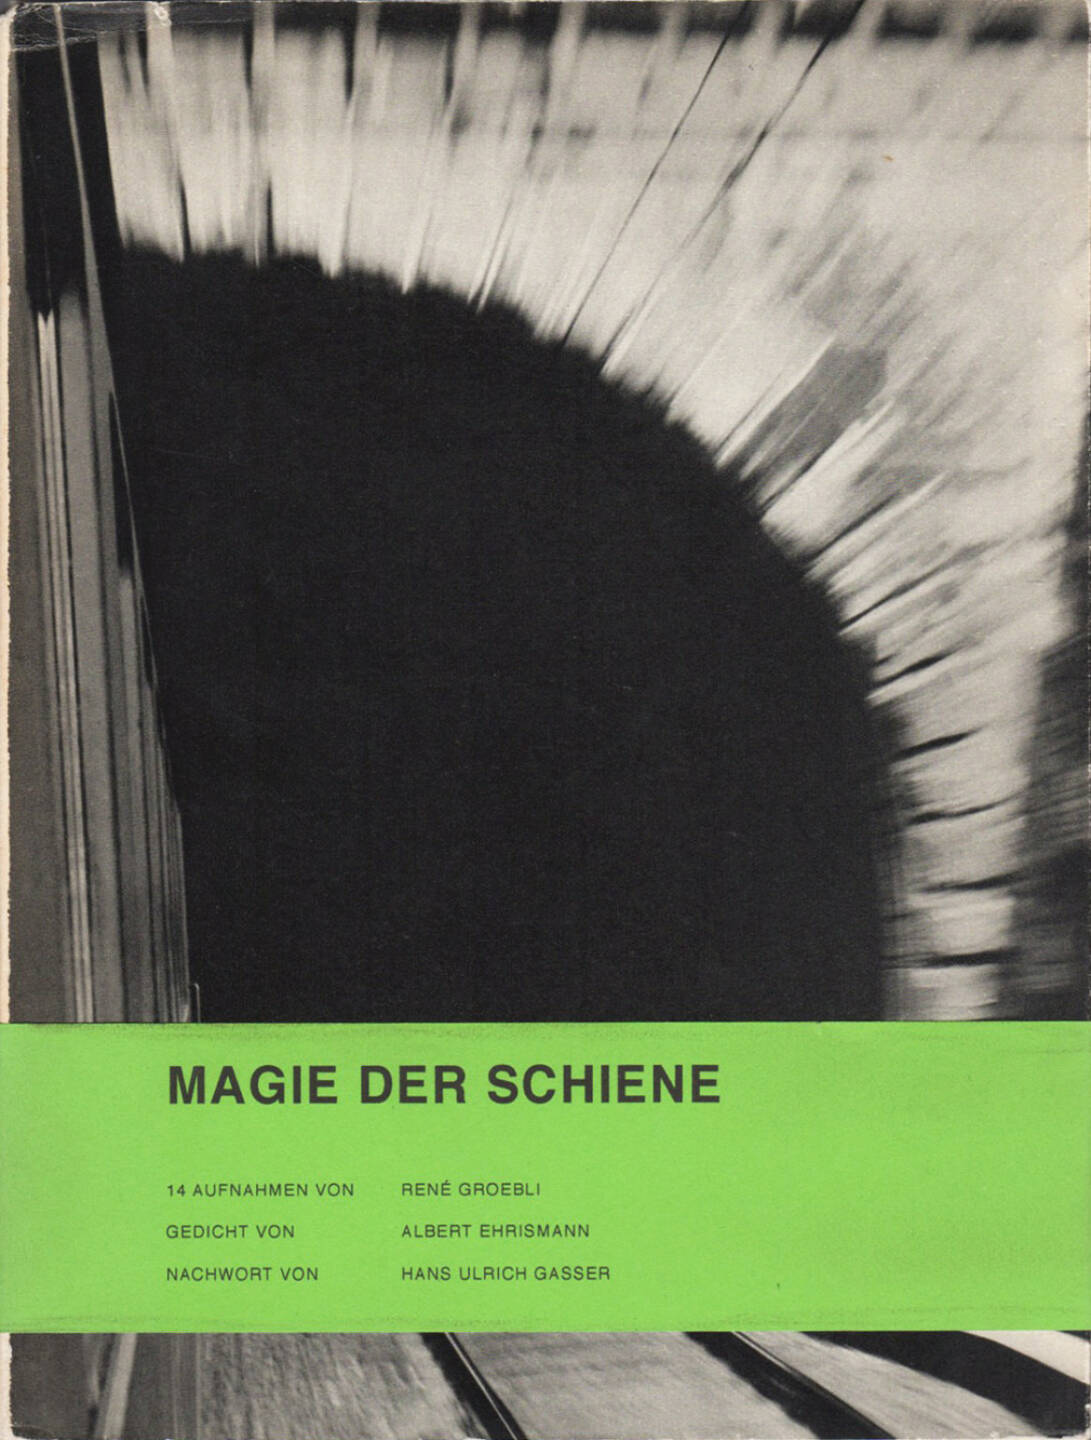 René Groebli - Magie der Schiene, Kubus-Verlag 1949, Cover - http://josefchladek.com/book/rene_groebli_-_magie_der_schiene